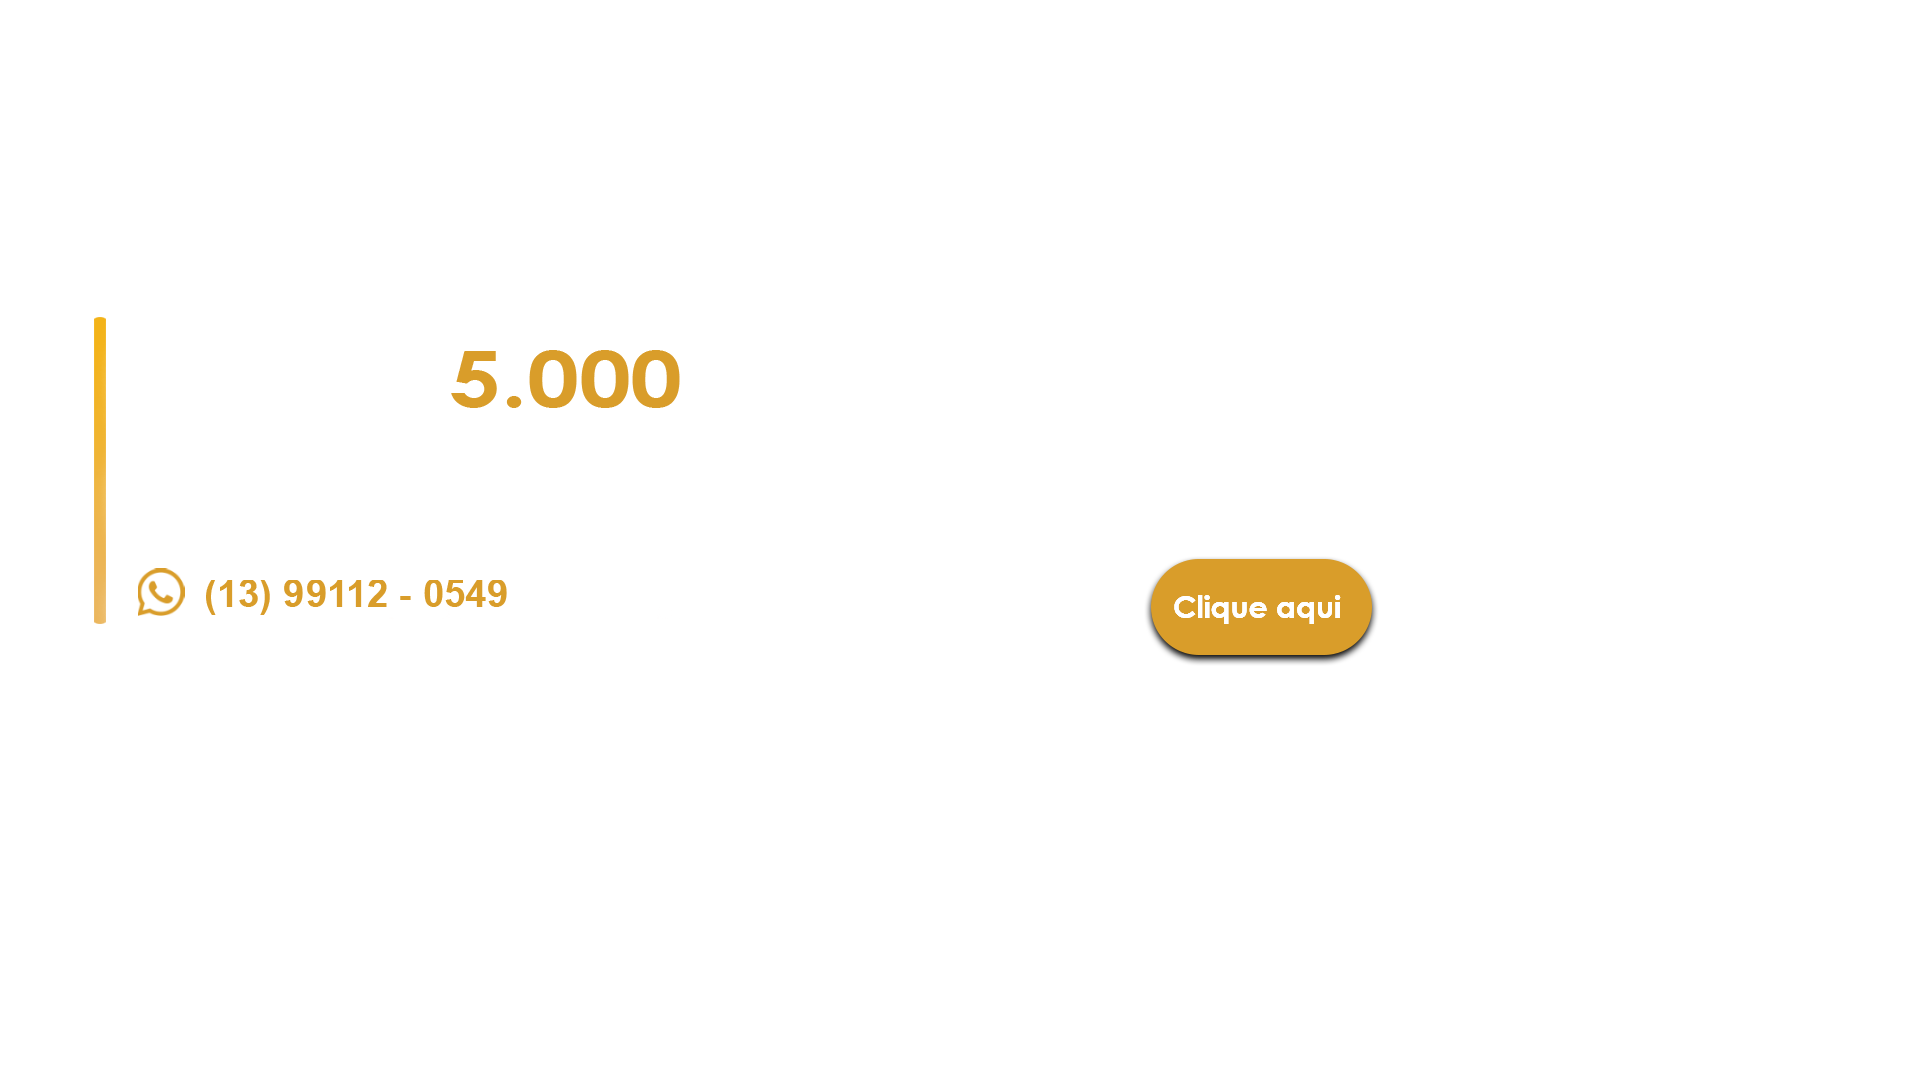 Compre pelo whatsapp